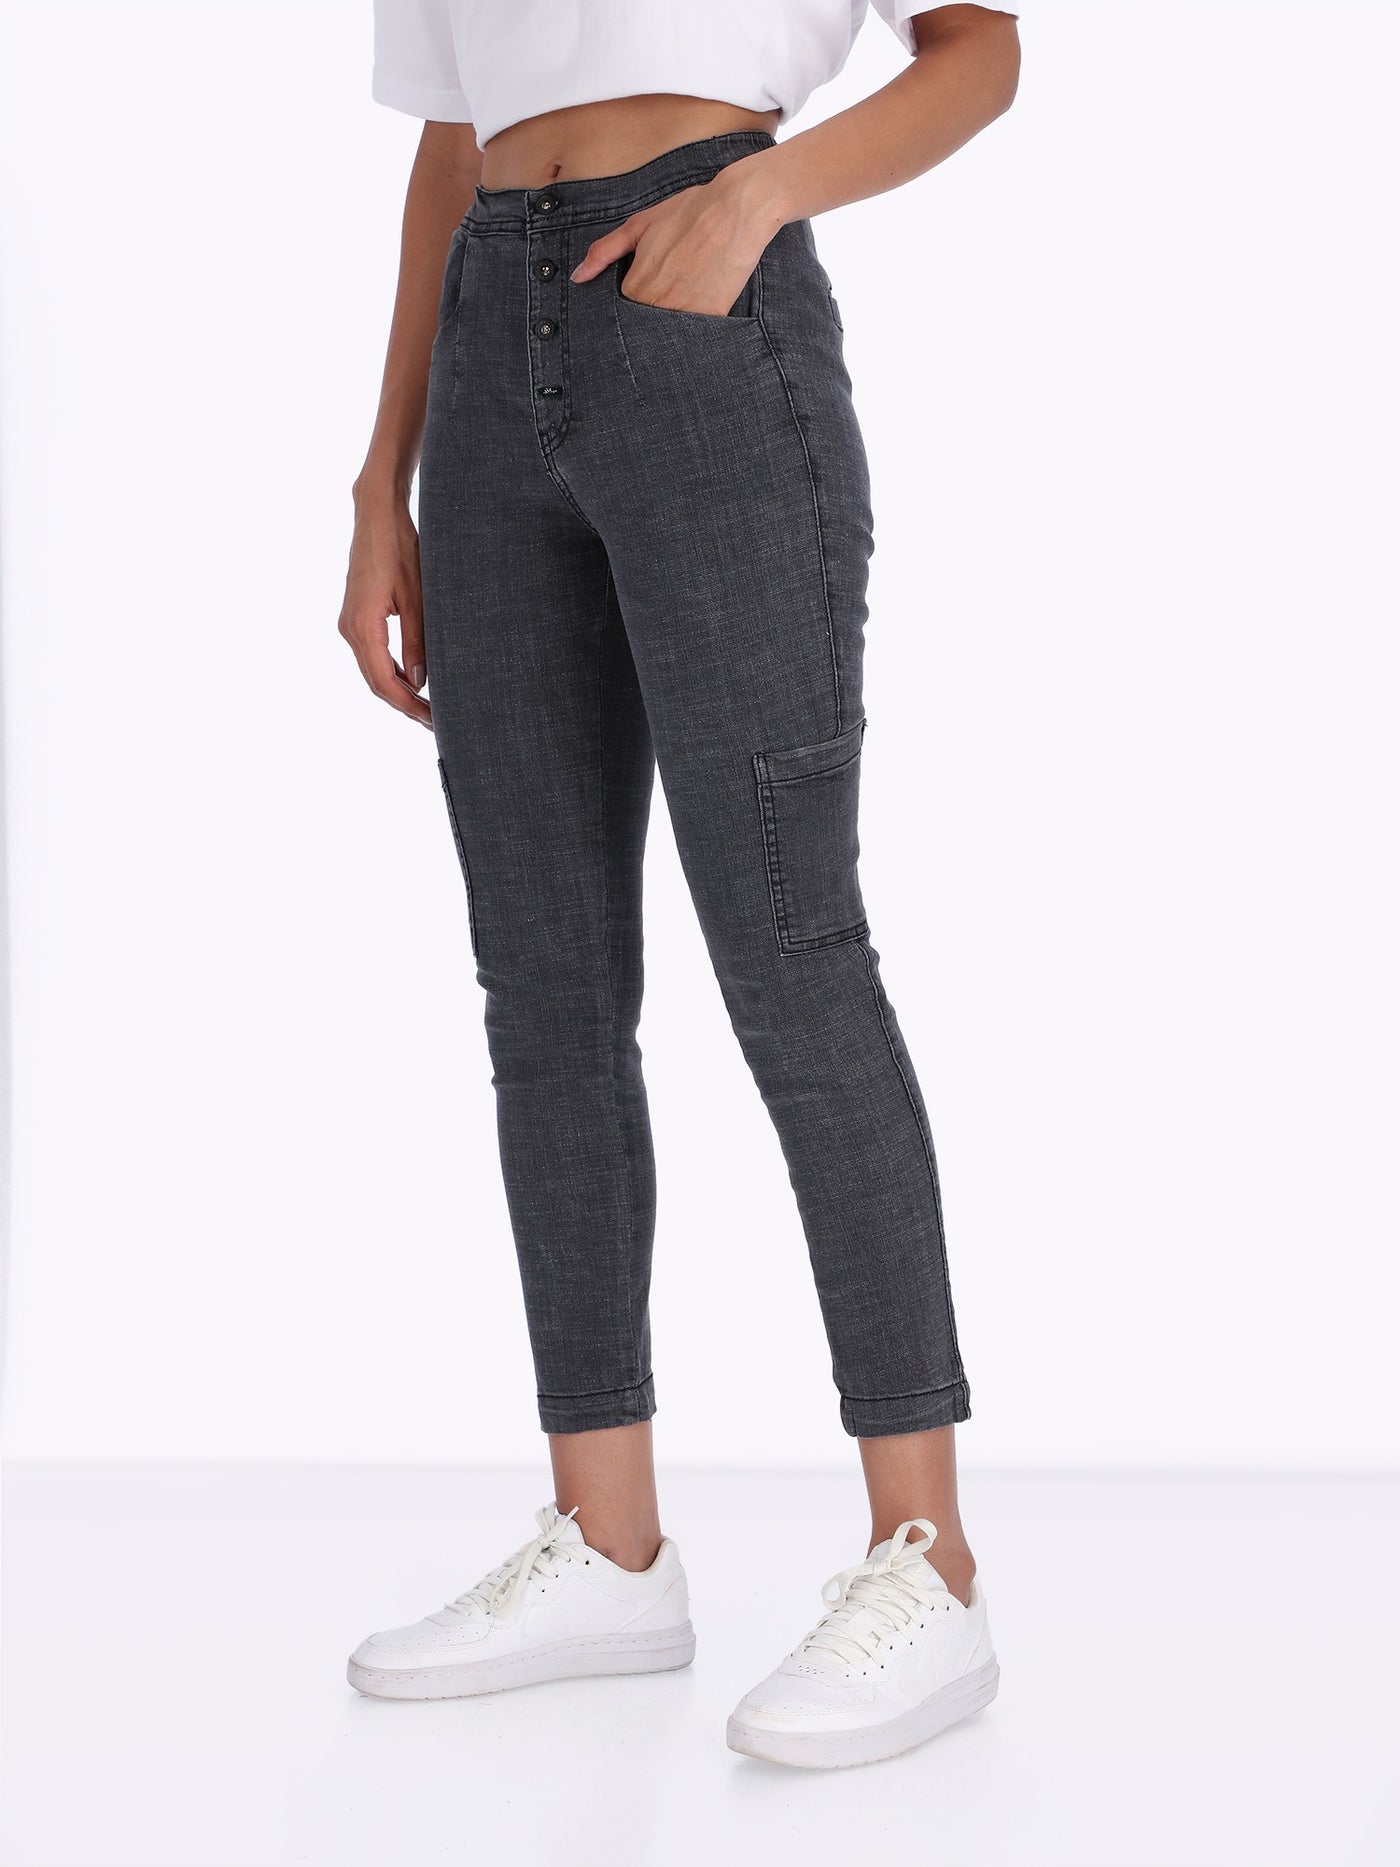 OR Women's Cargo Pockets Skinny Jeans